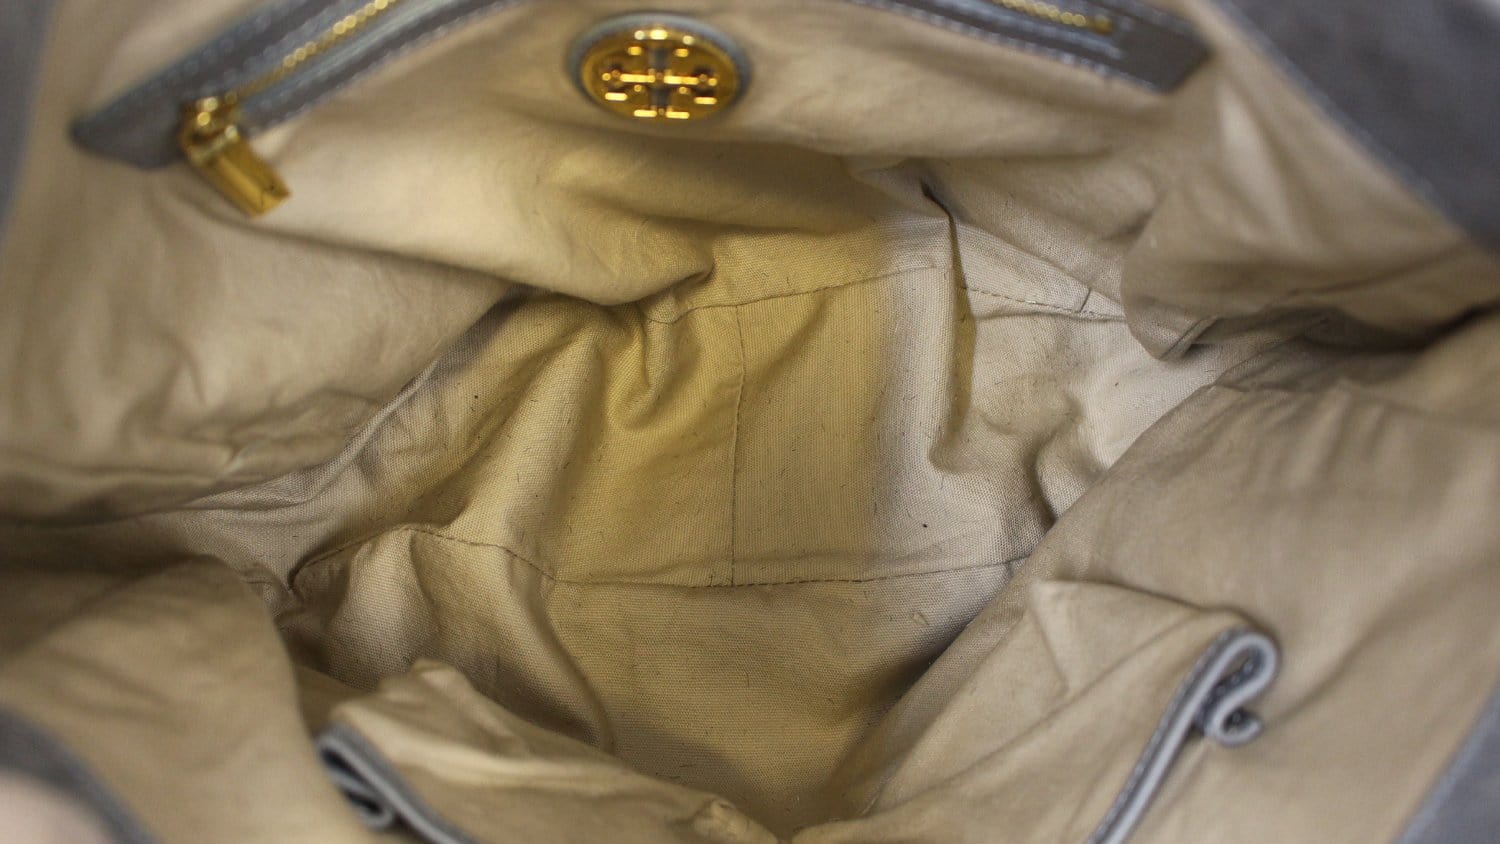 TORY BURCH Dena Leather Hobo Bag